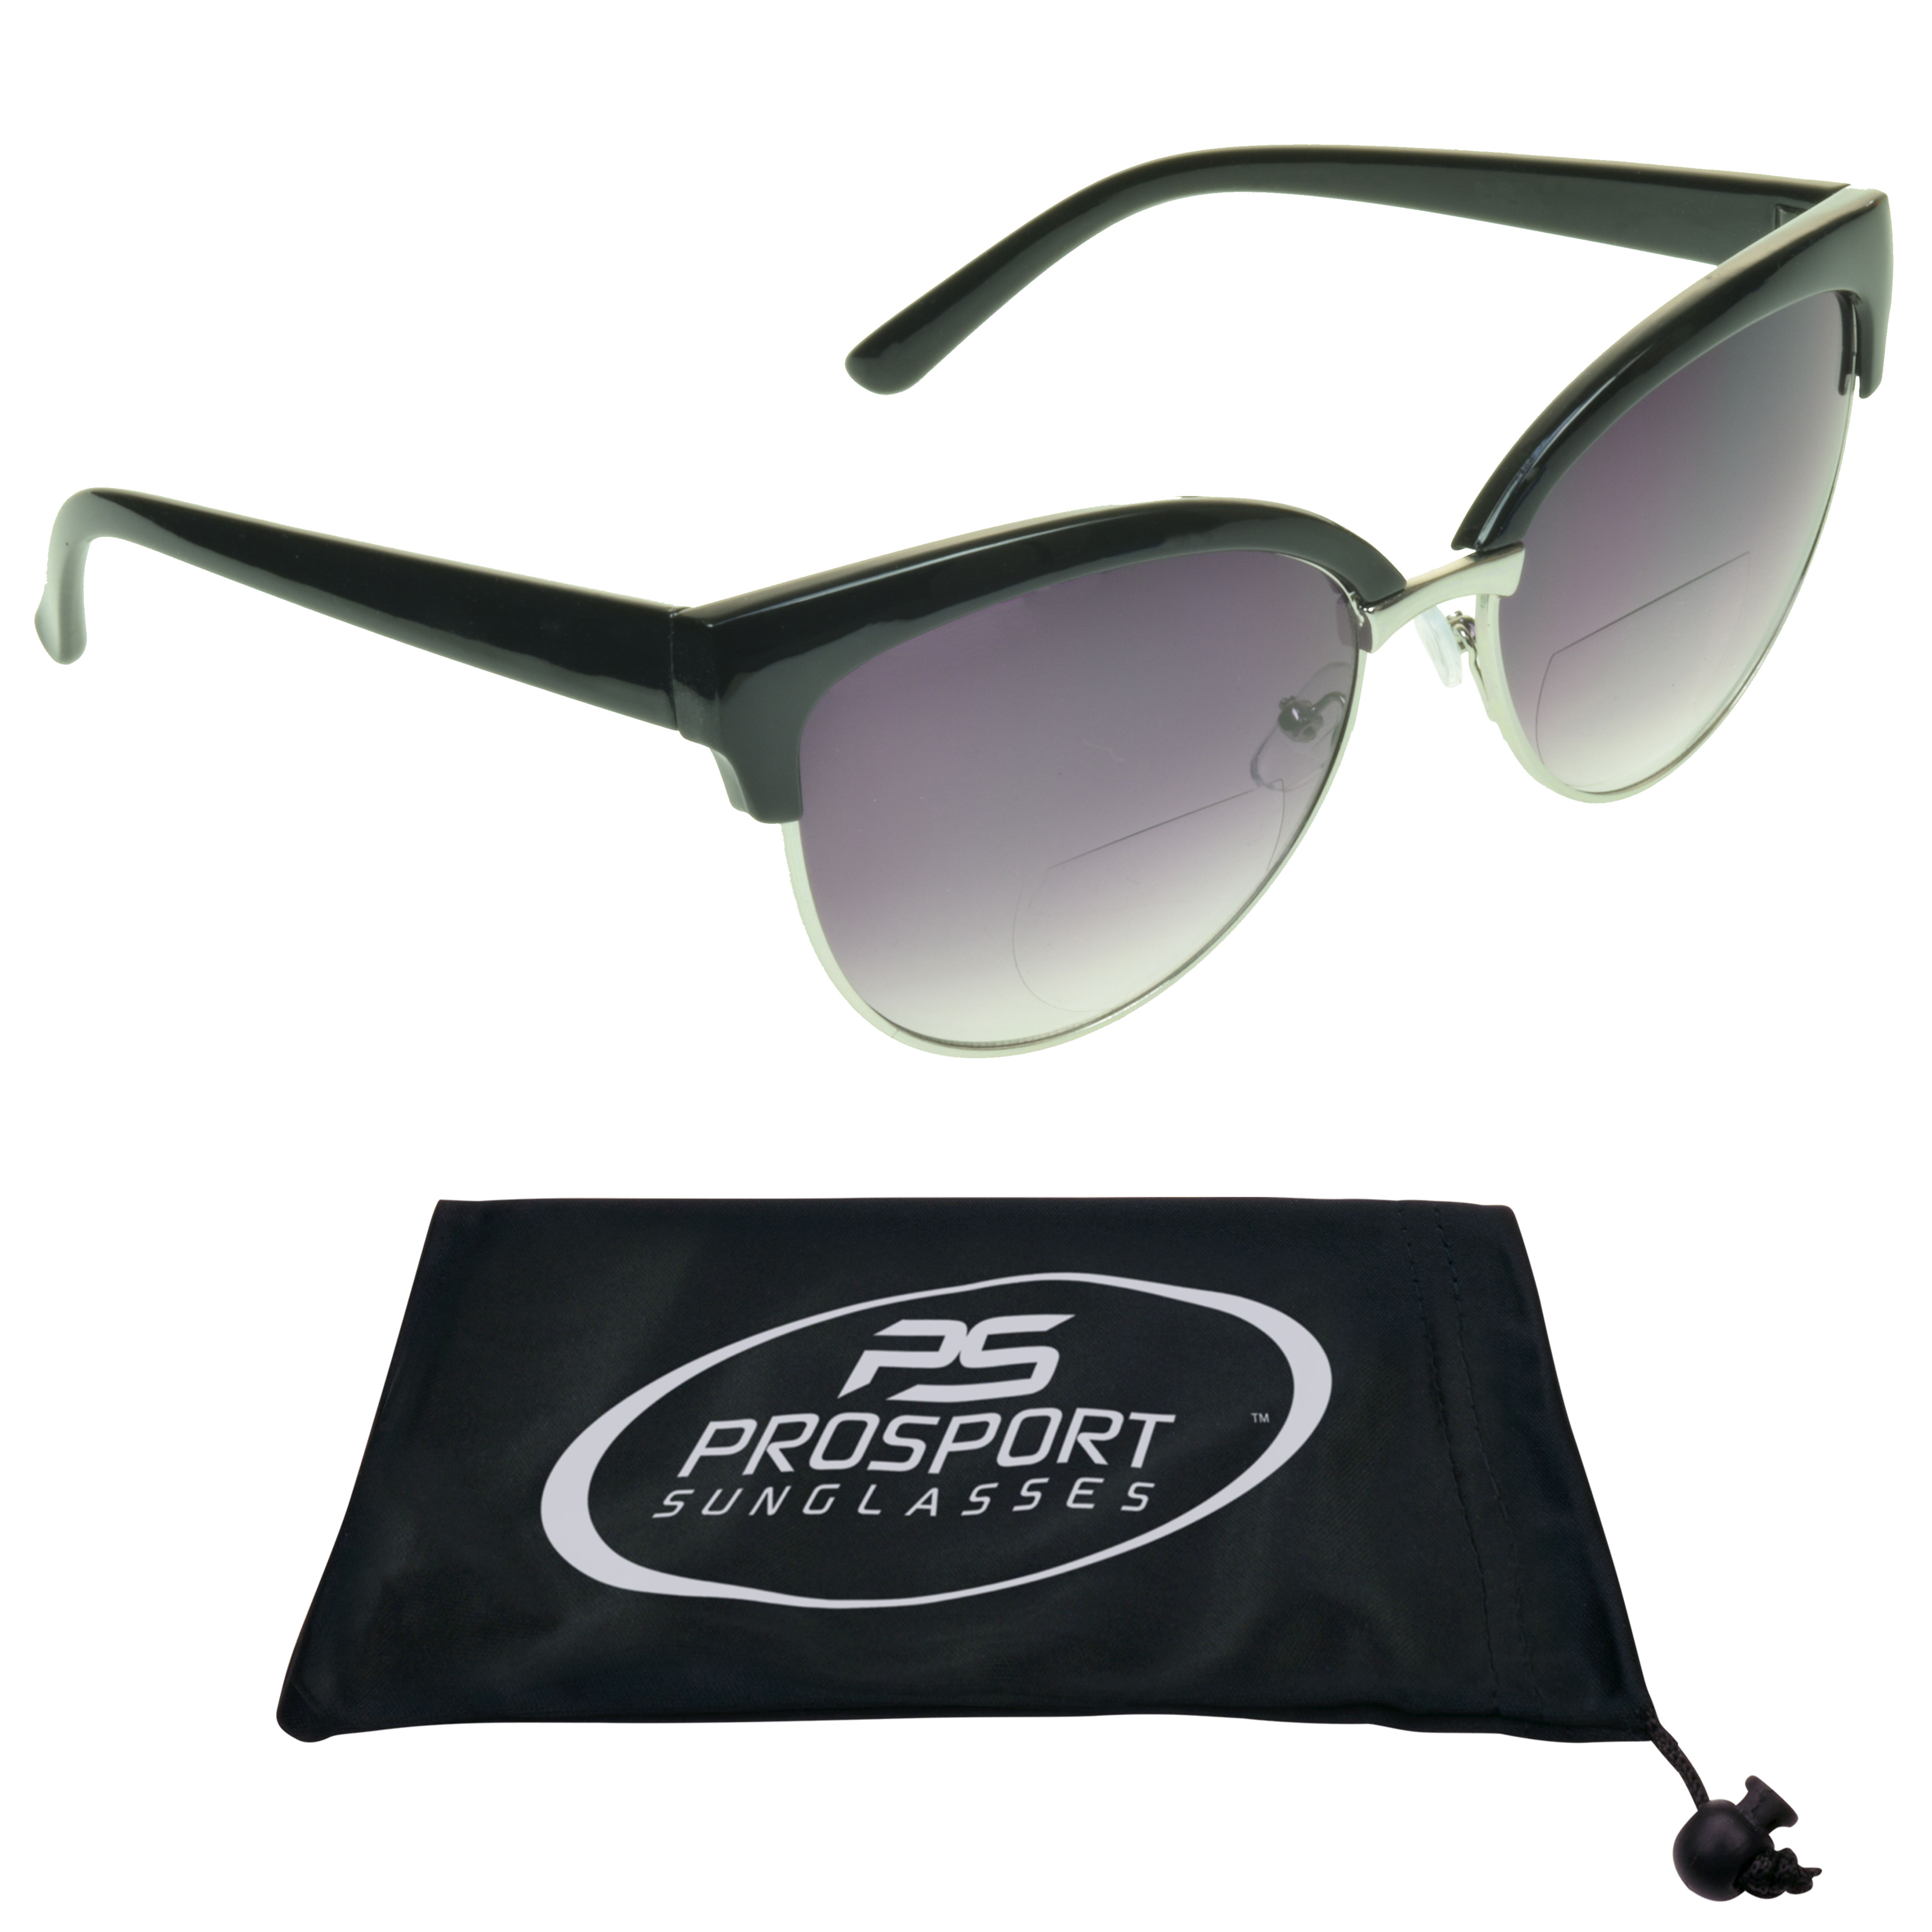 proSPORT Women Bifocal Reading Cateye Fashion Horn Rim Sunglasses Black Silver Frame Smoke Lens +1.25 - image 1 of 5